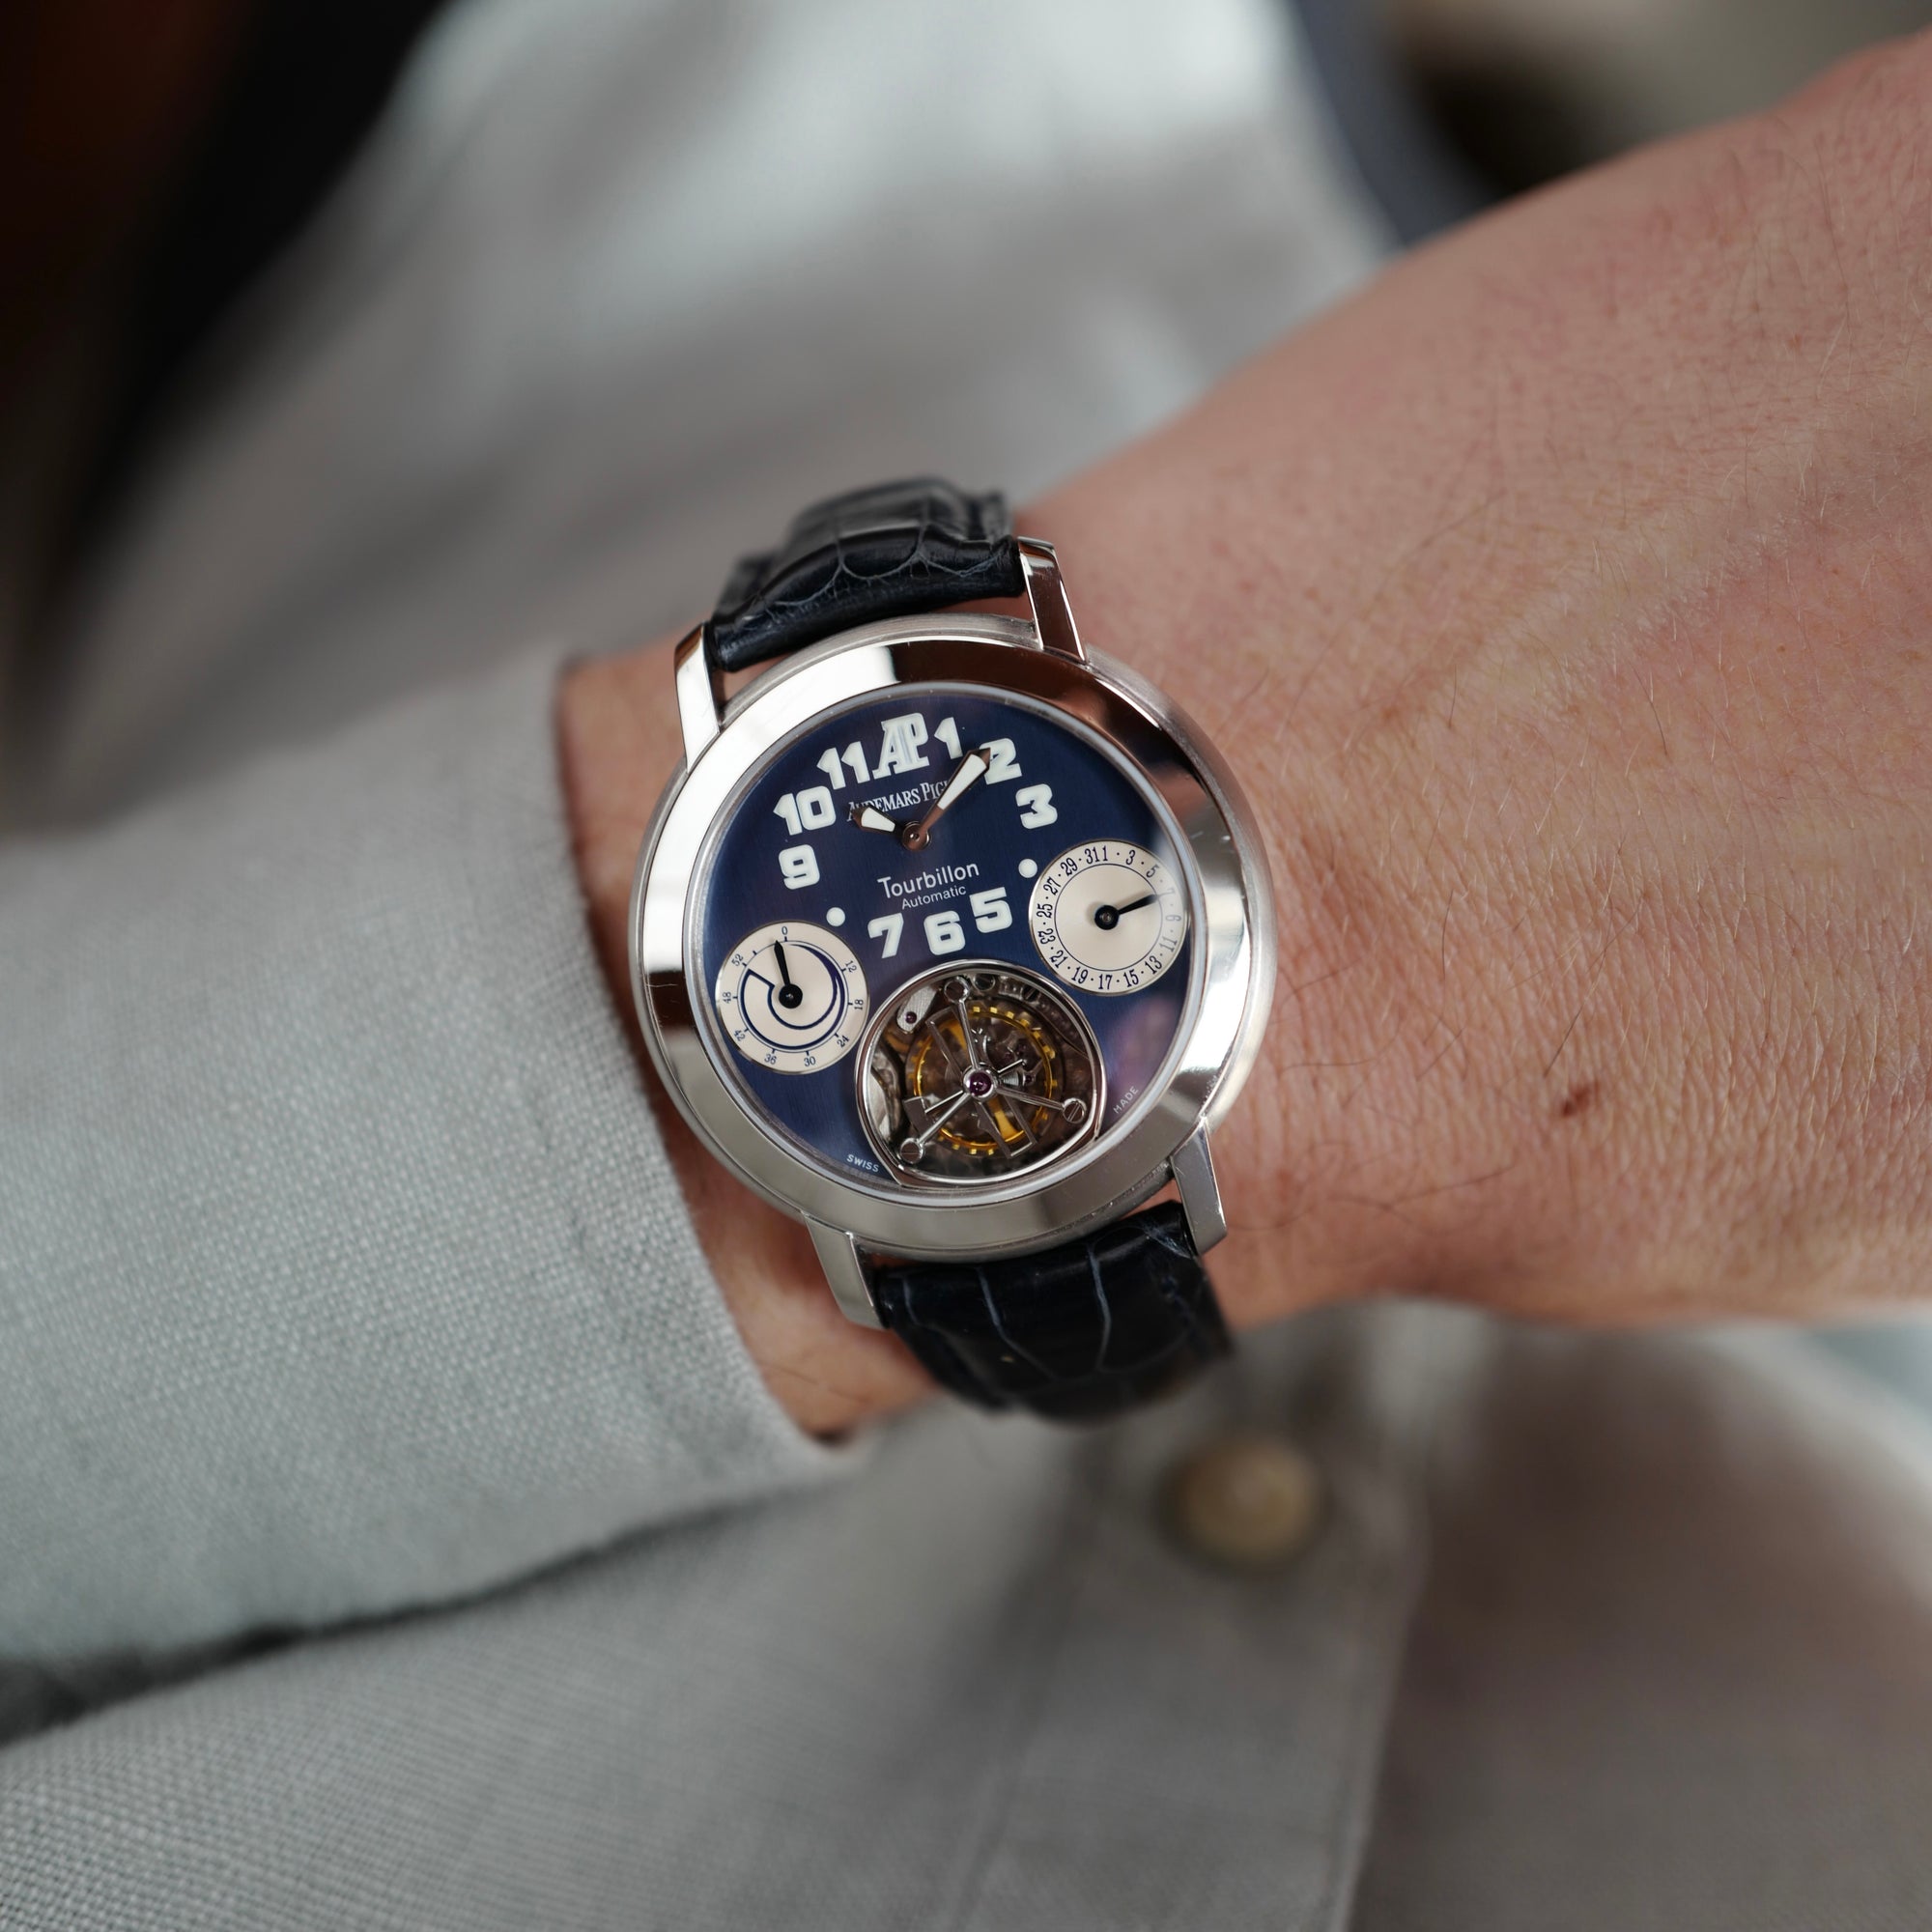 Audemars Piguet - Audemars Piguet Platinum 150th Anniversary Tourbillon Watch Ref. 25964 - The Keystone Watches